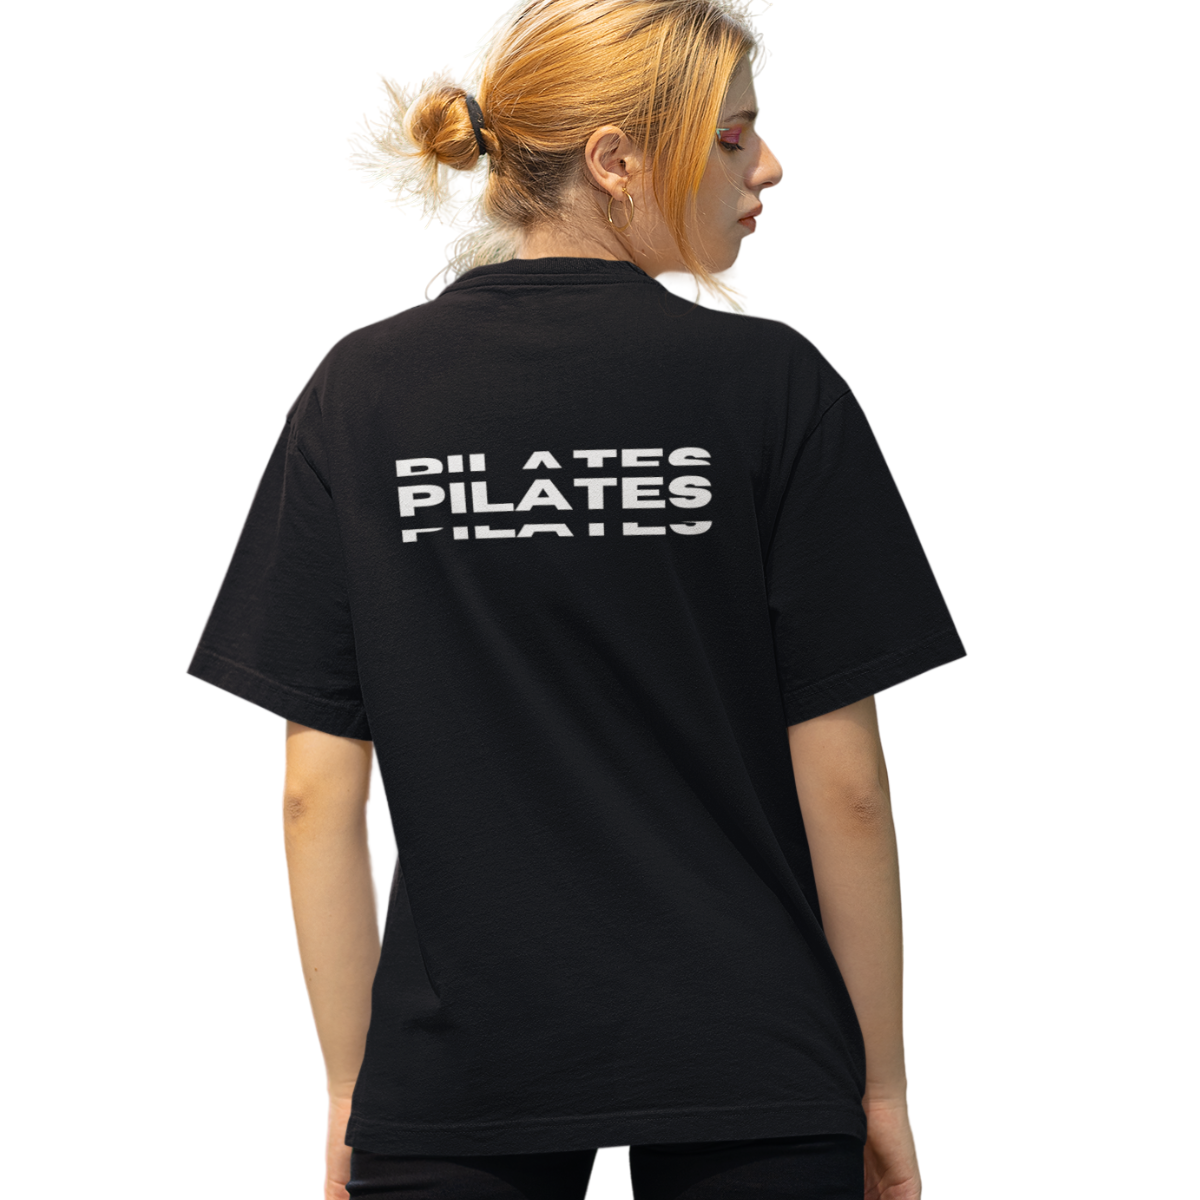 Pilates Has Your Back T-shirt